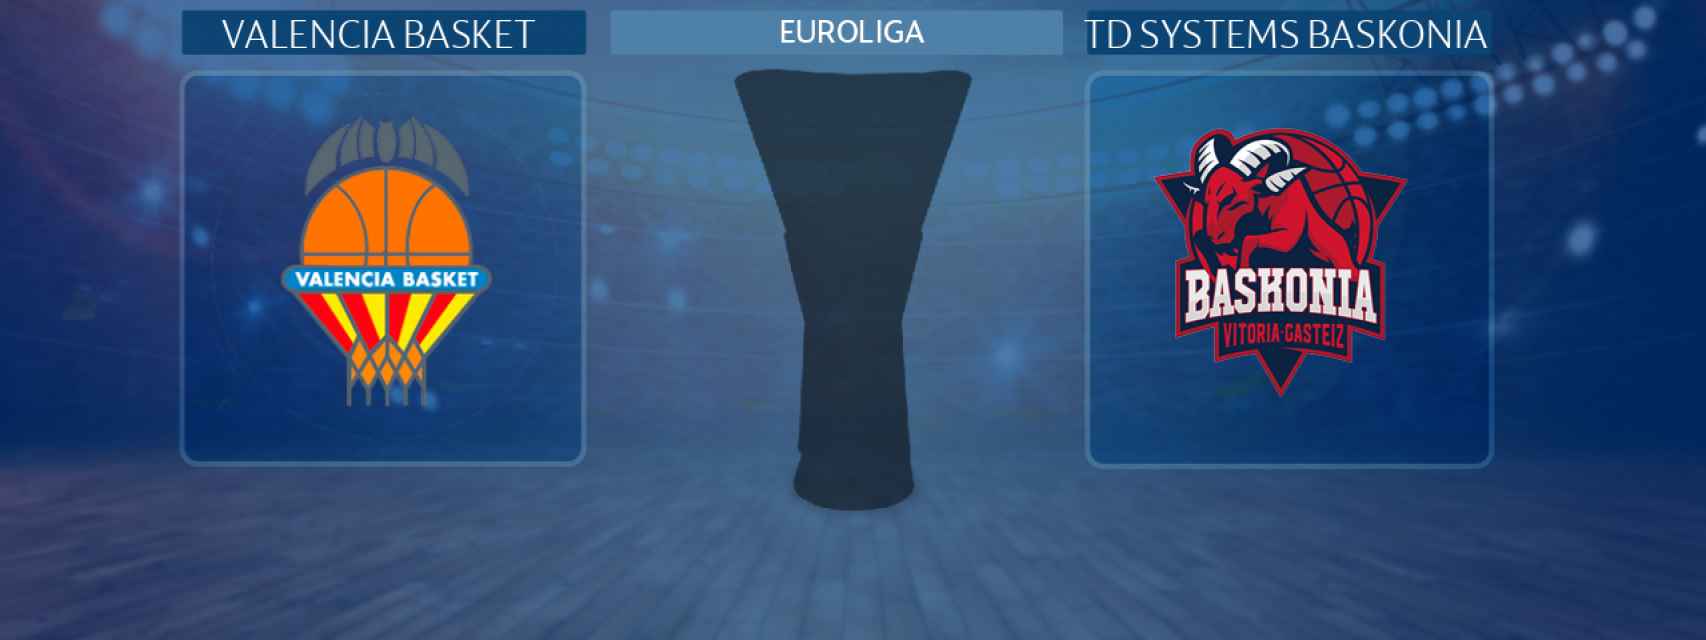 Valencia Basket - TD Systems Baskonia, partido de la Euroliga